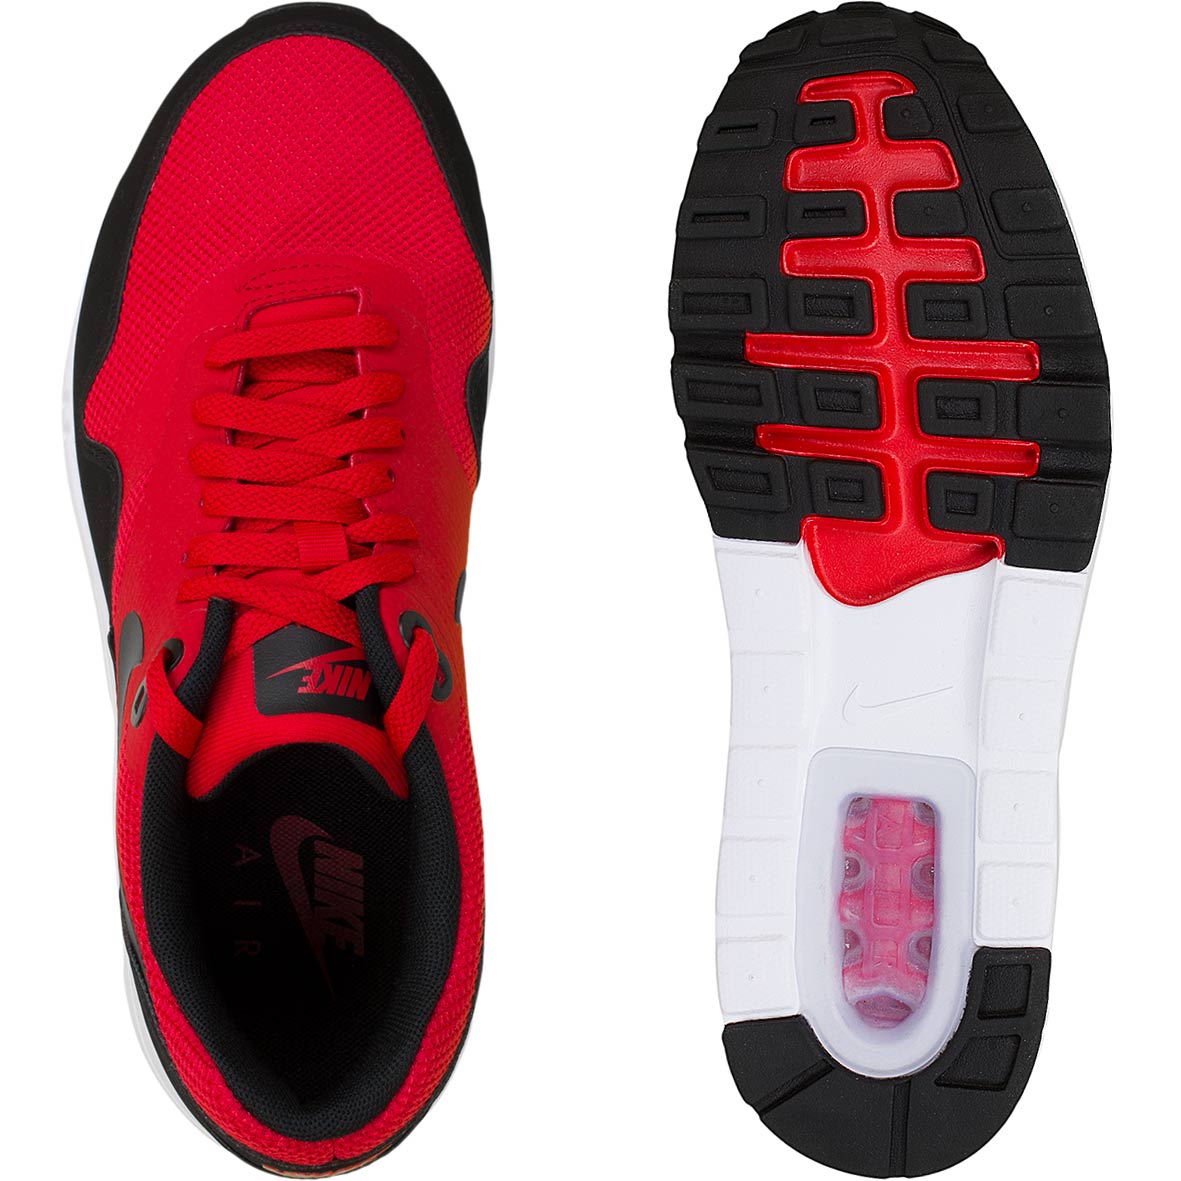 Altaar agenda Verhogen ☆ Nike Sneaker Air Max 1 Ultra 2.0 Essential rot/schwarz - hier bestellen!